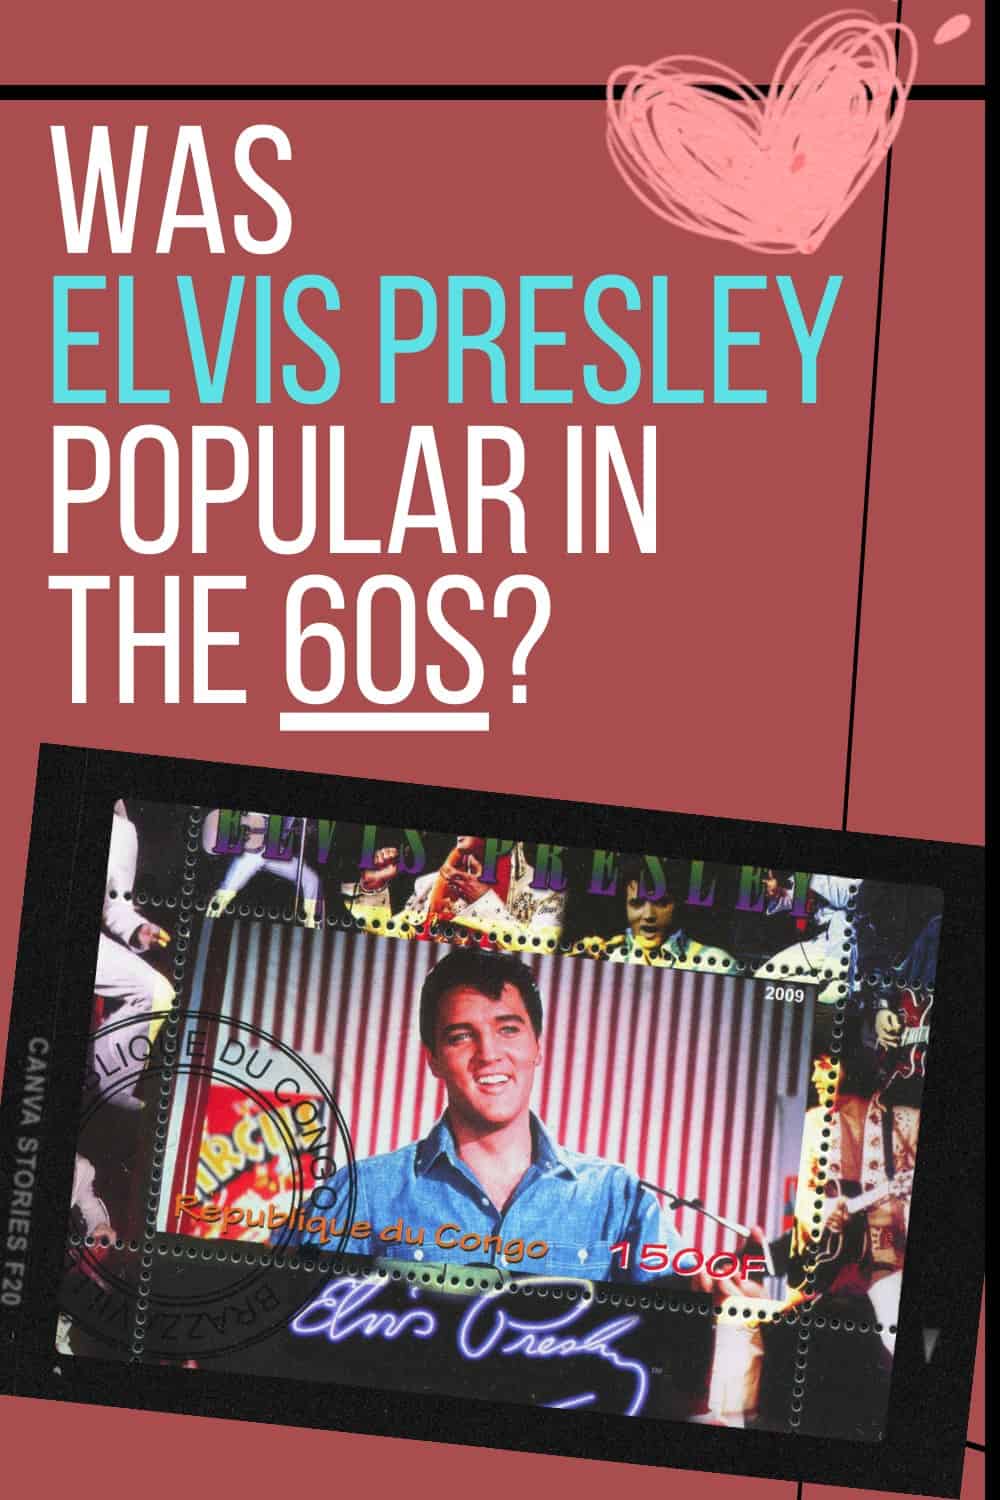 Elvis Presley was still popular in the 60s